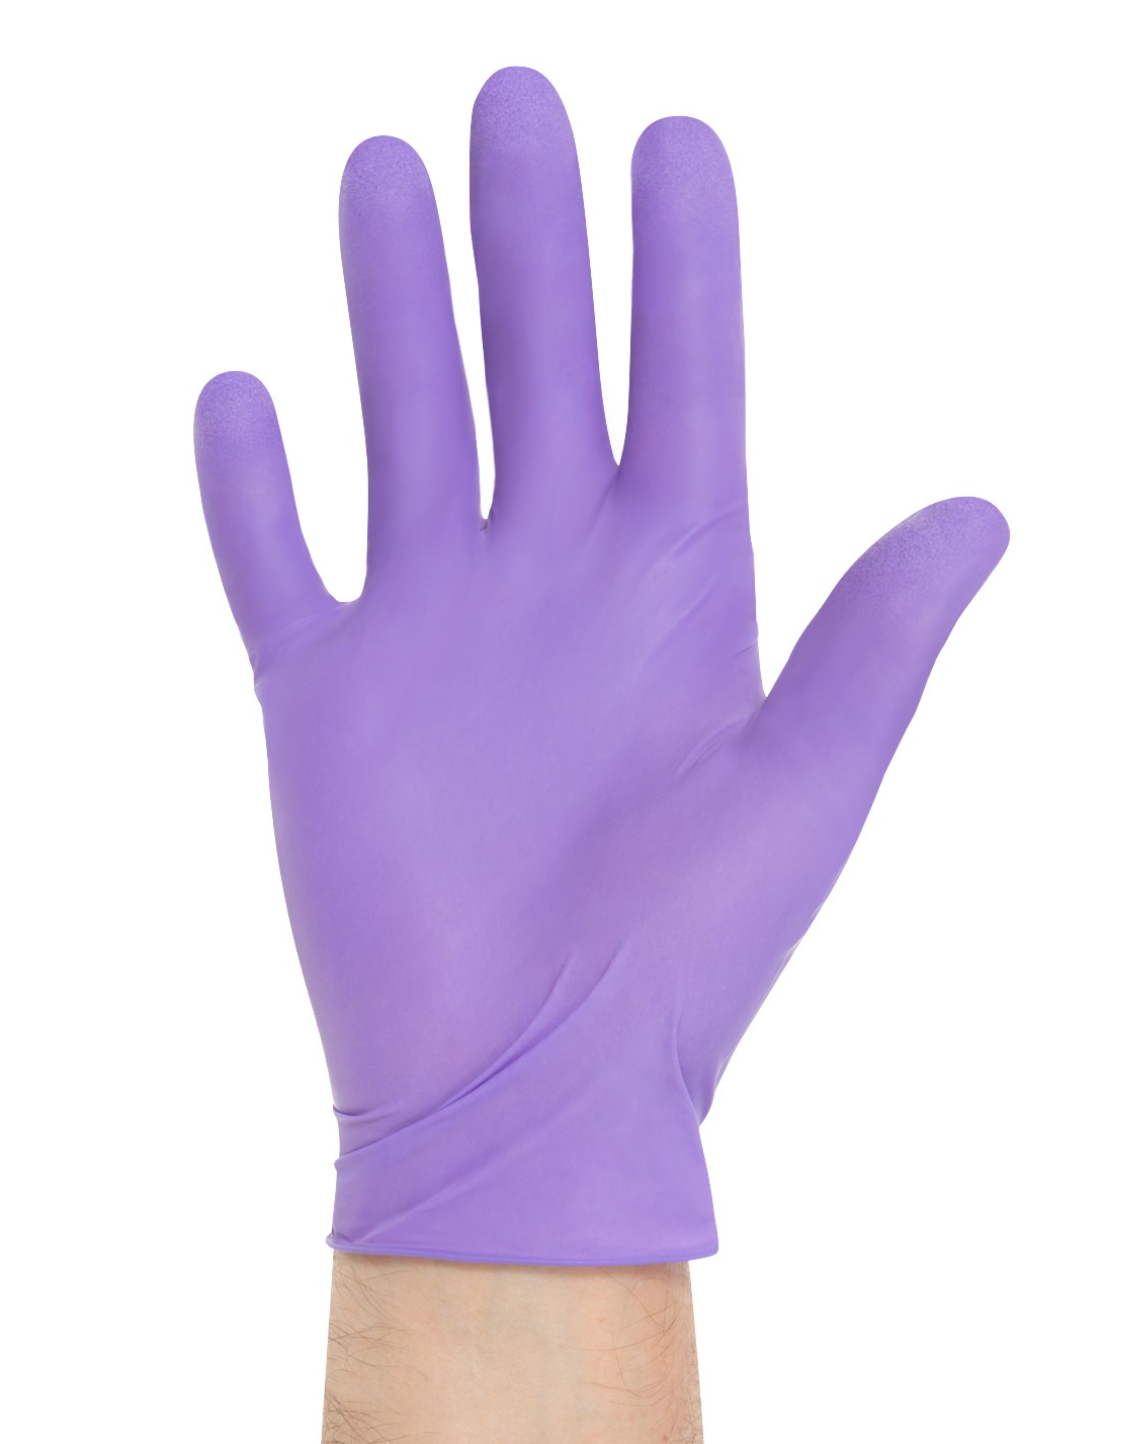 PURPLE Nitrile Gloves, Small, Box of 100